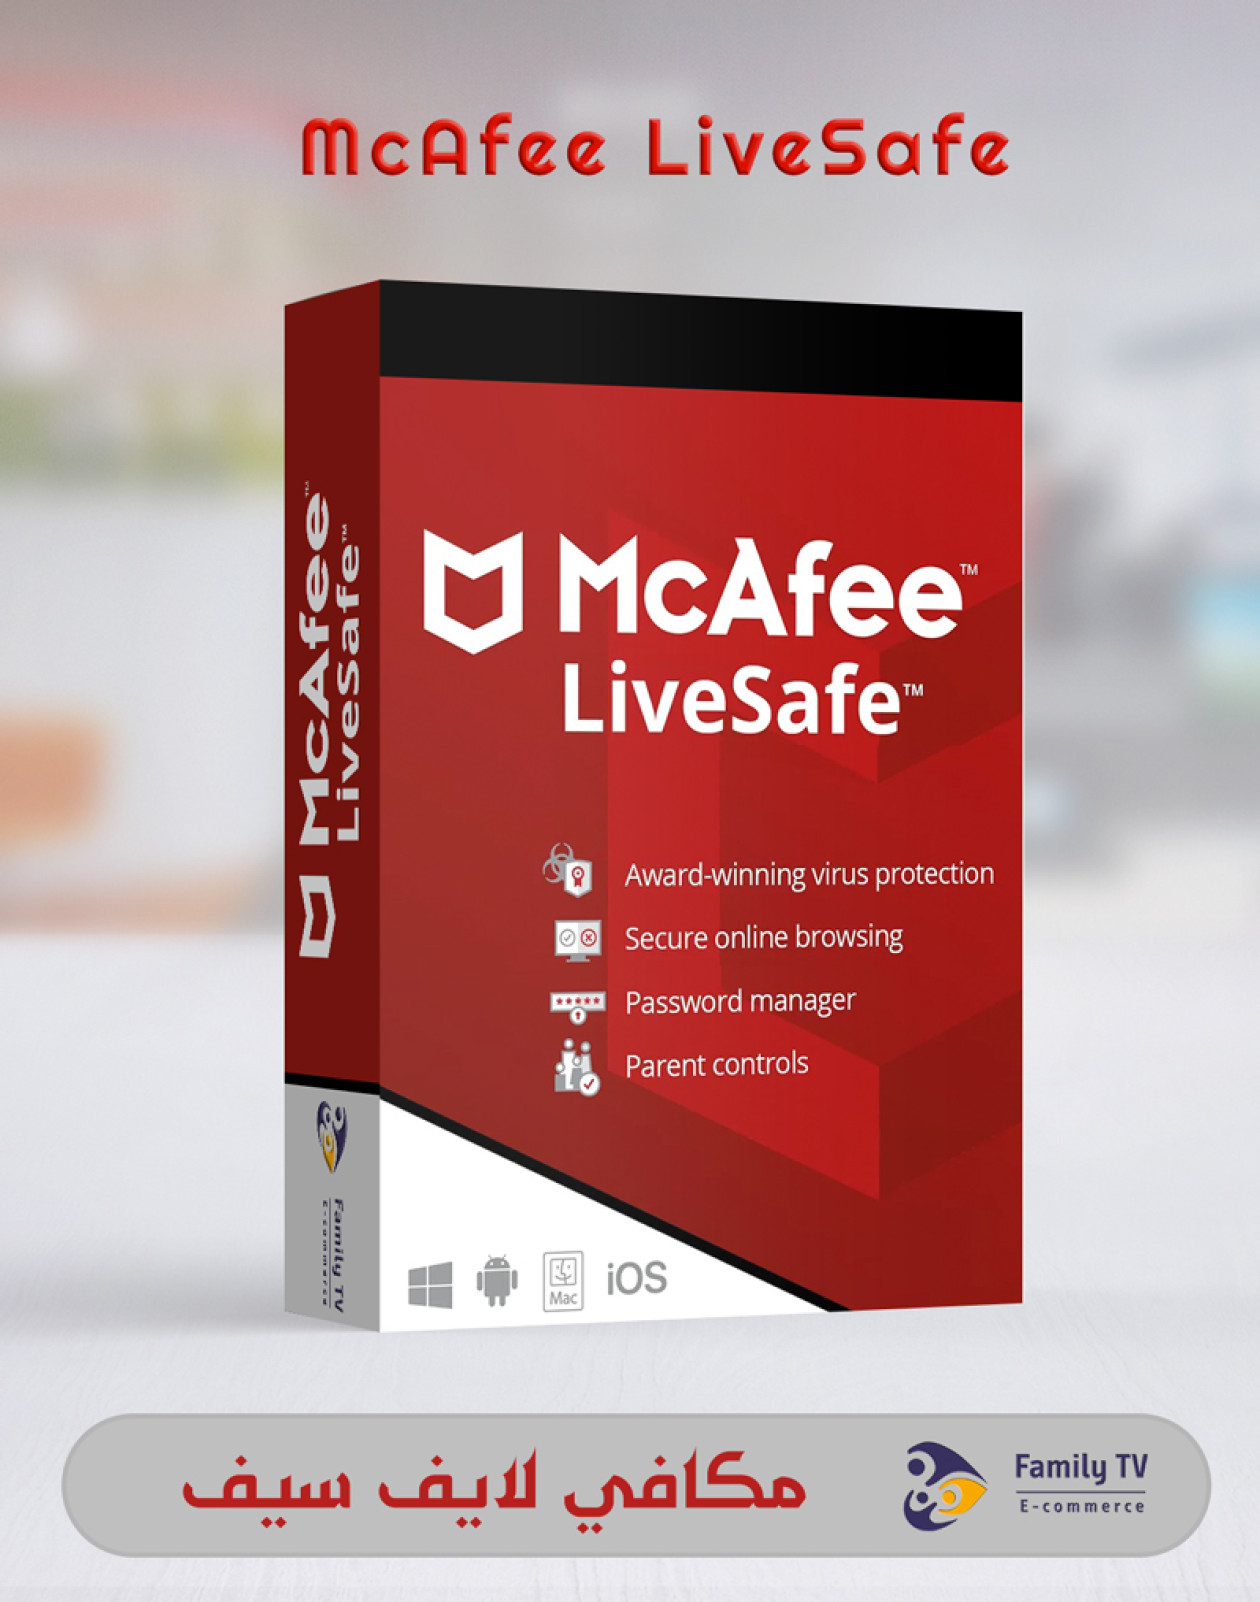 McAfee LifeSave Protection